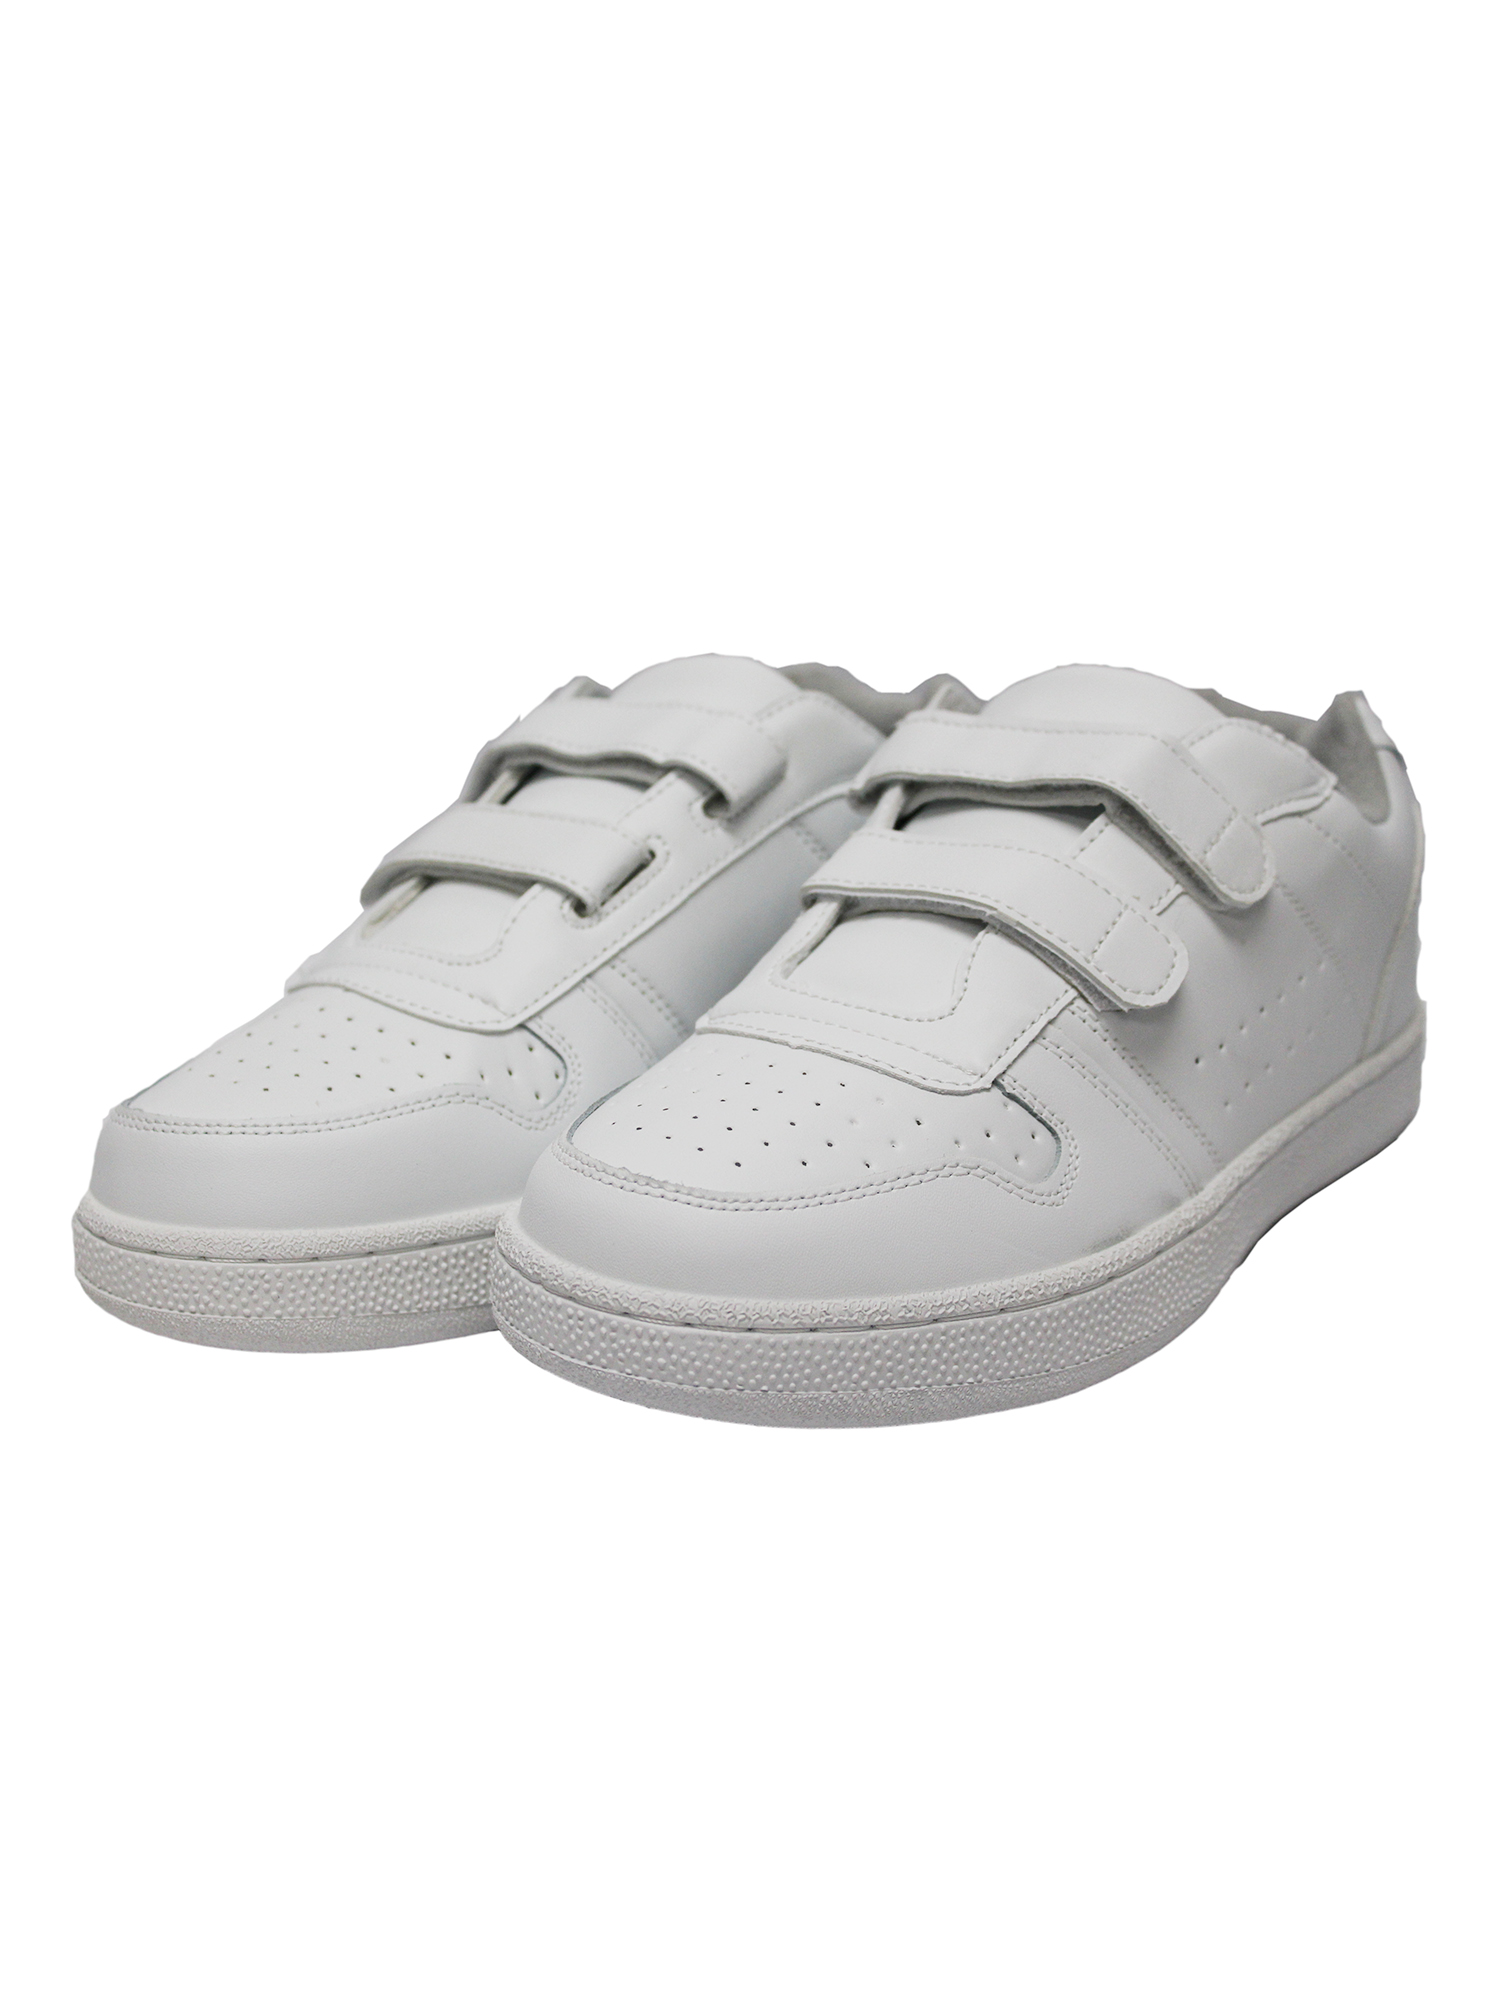 Tanleewa Men's Leather Strap Sneakers Lightweight Hook and Loop Walking Shoe Size 9.5 Adult Male - image 2 of 5